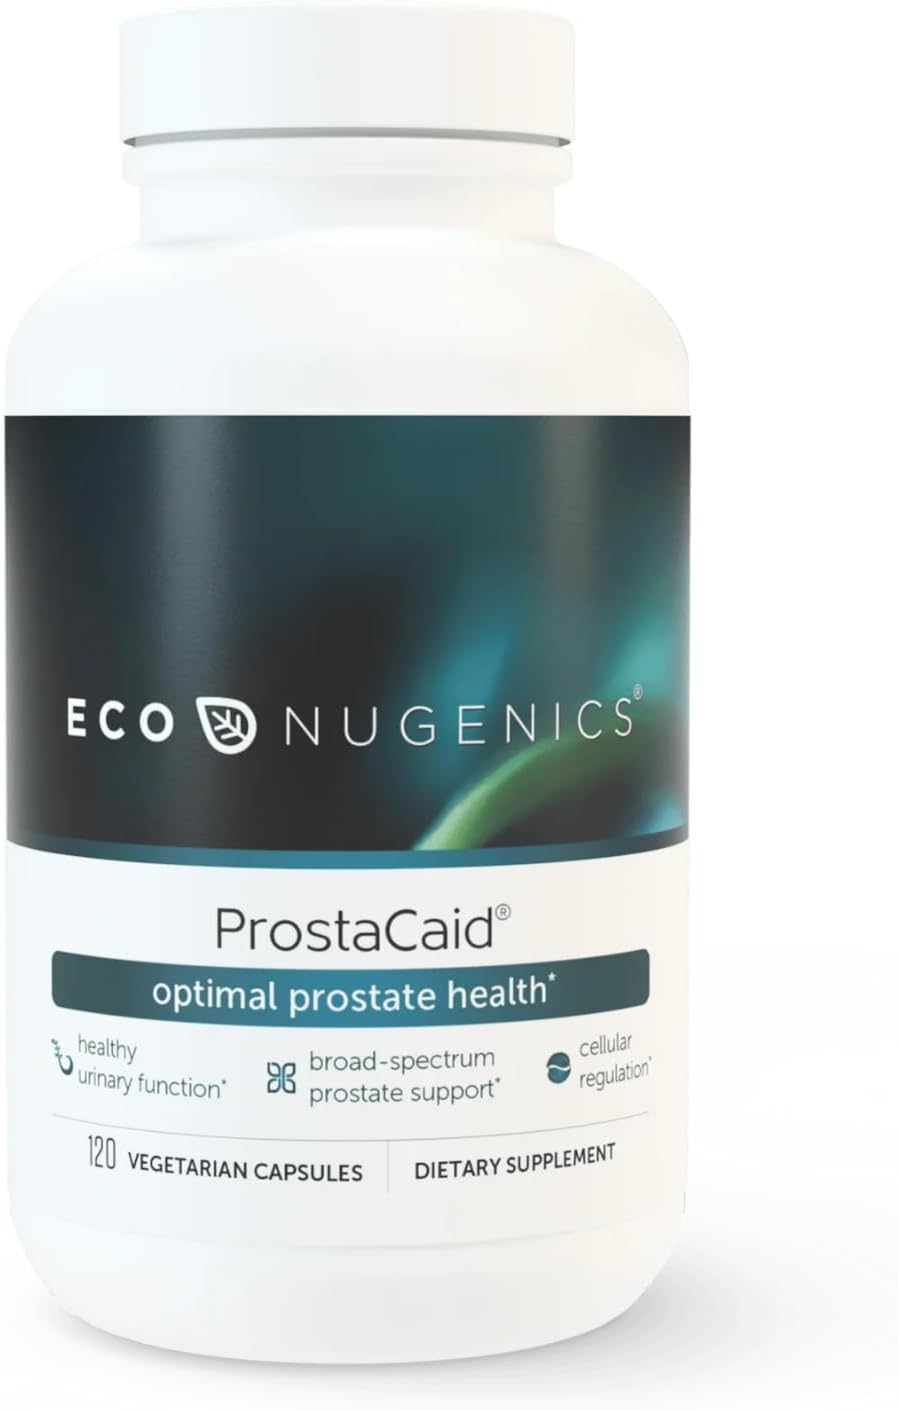 EcoNugenics ProstaCaid Prostate Health Supplements for Men with Saw Palmetto Extract, DIM, Resveratrol, Turmeric BCM-95 Curcumin, Quercetin, Berberine, Lycopene, Mushrooms (120 Capsules)